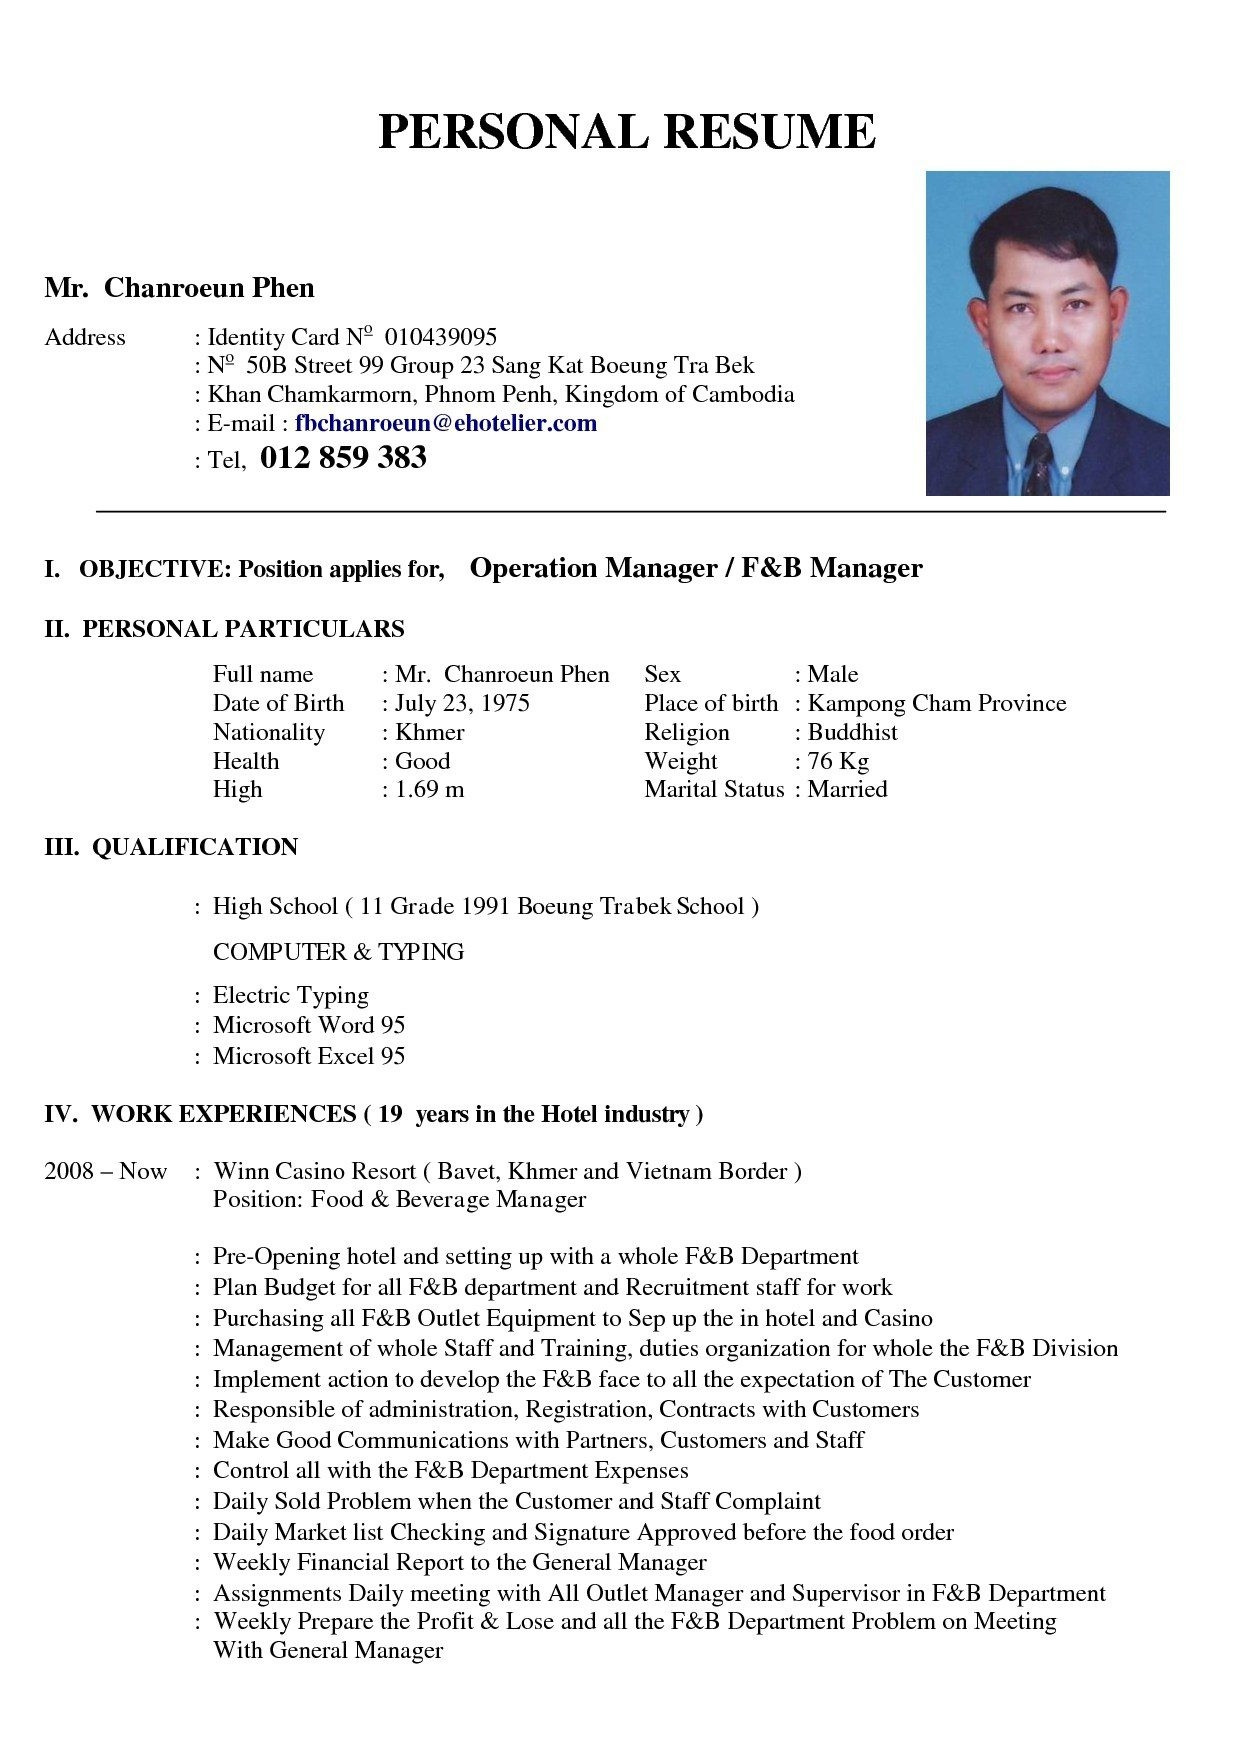 Sample Resume for Hotel Management Job 11 Universal Hotel Resume format Word Look Professional My Blog